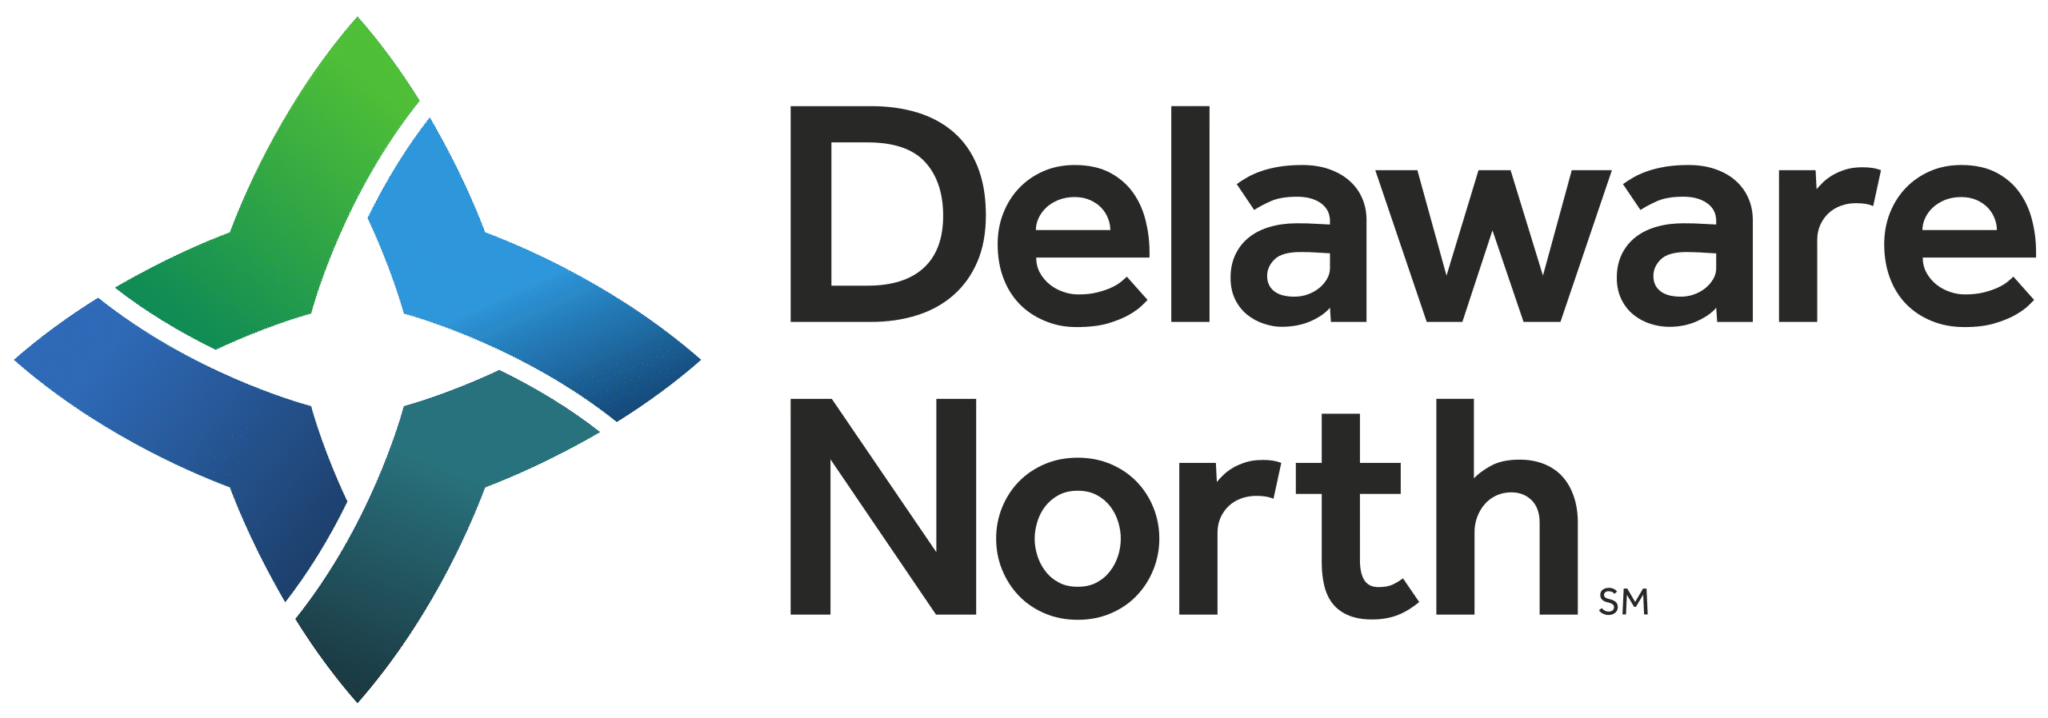 شعار Delaware n